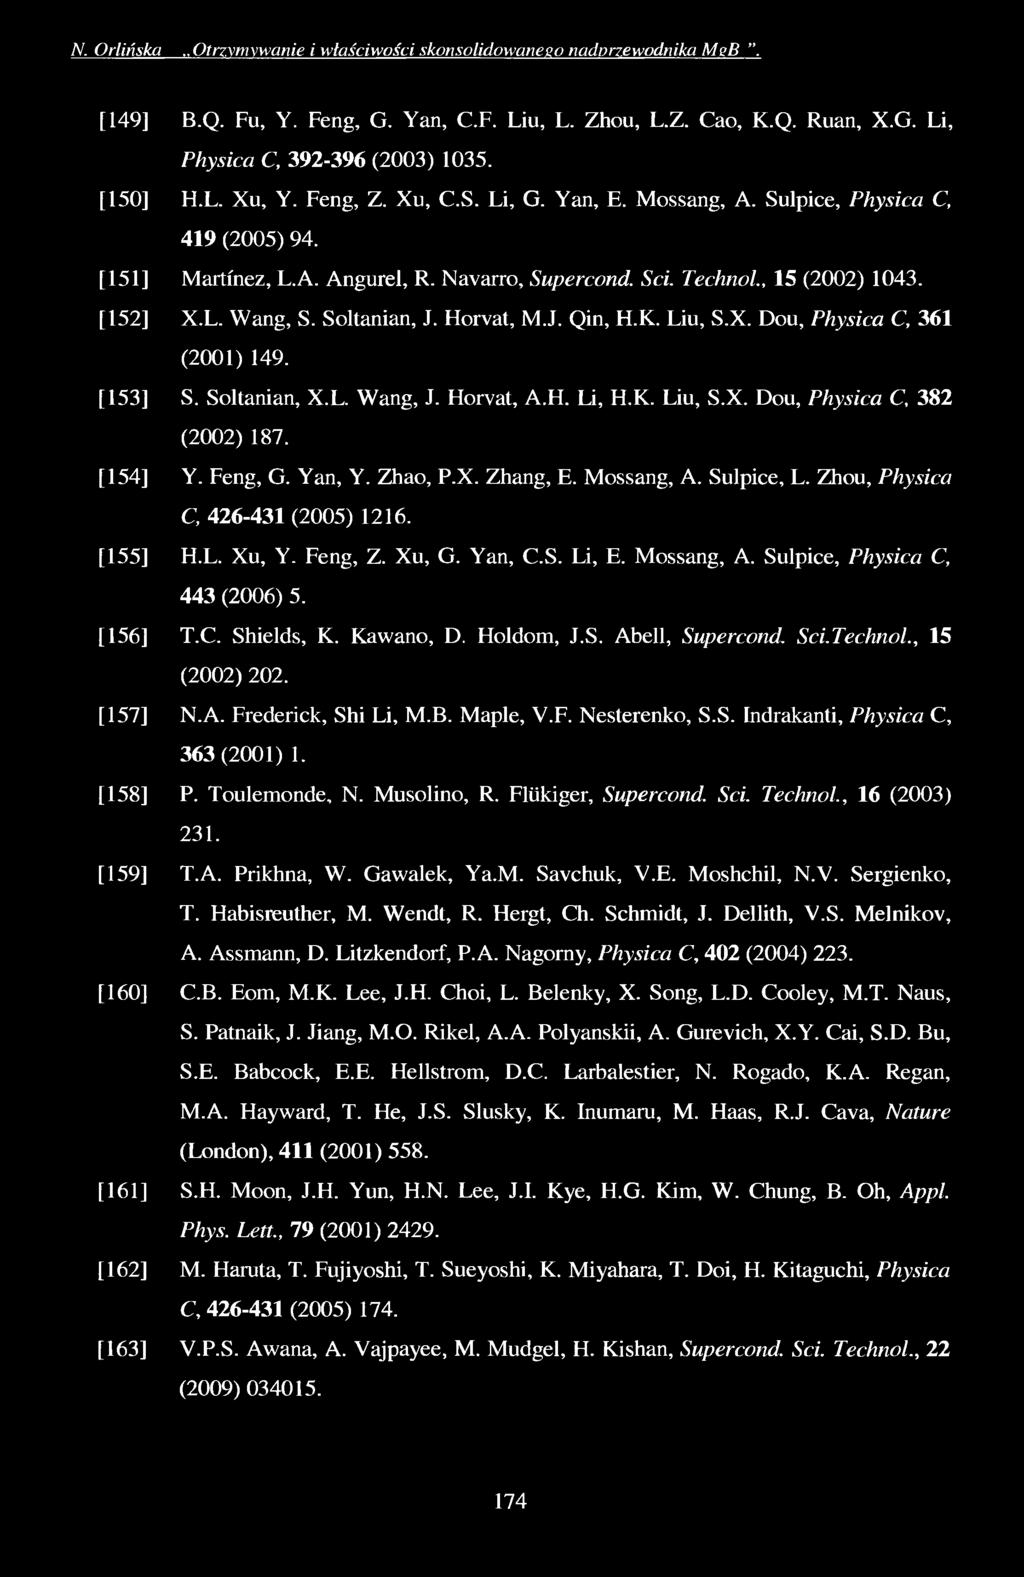 Navarro, Supercond. Sci. Technol., 15 (2002) 1043. X.L. Wang, S. Soltanian, J. Horvat, M.J. Qin, H.K. Liu, S.X. Dou, Physica C, 361 (2001) 149. S. Soltanian, X.L. Wang, J. Horvat, A.H. Li, H.K. Liu, S.X. Dou, Physica C, 382 (2002)187.